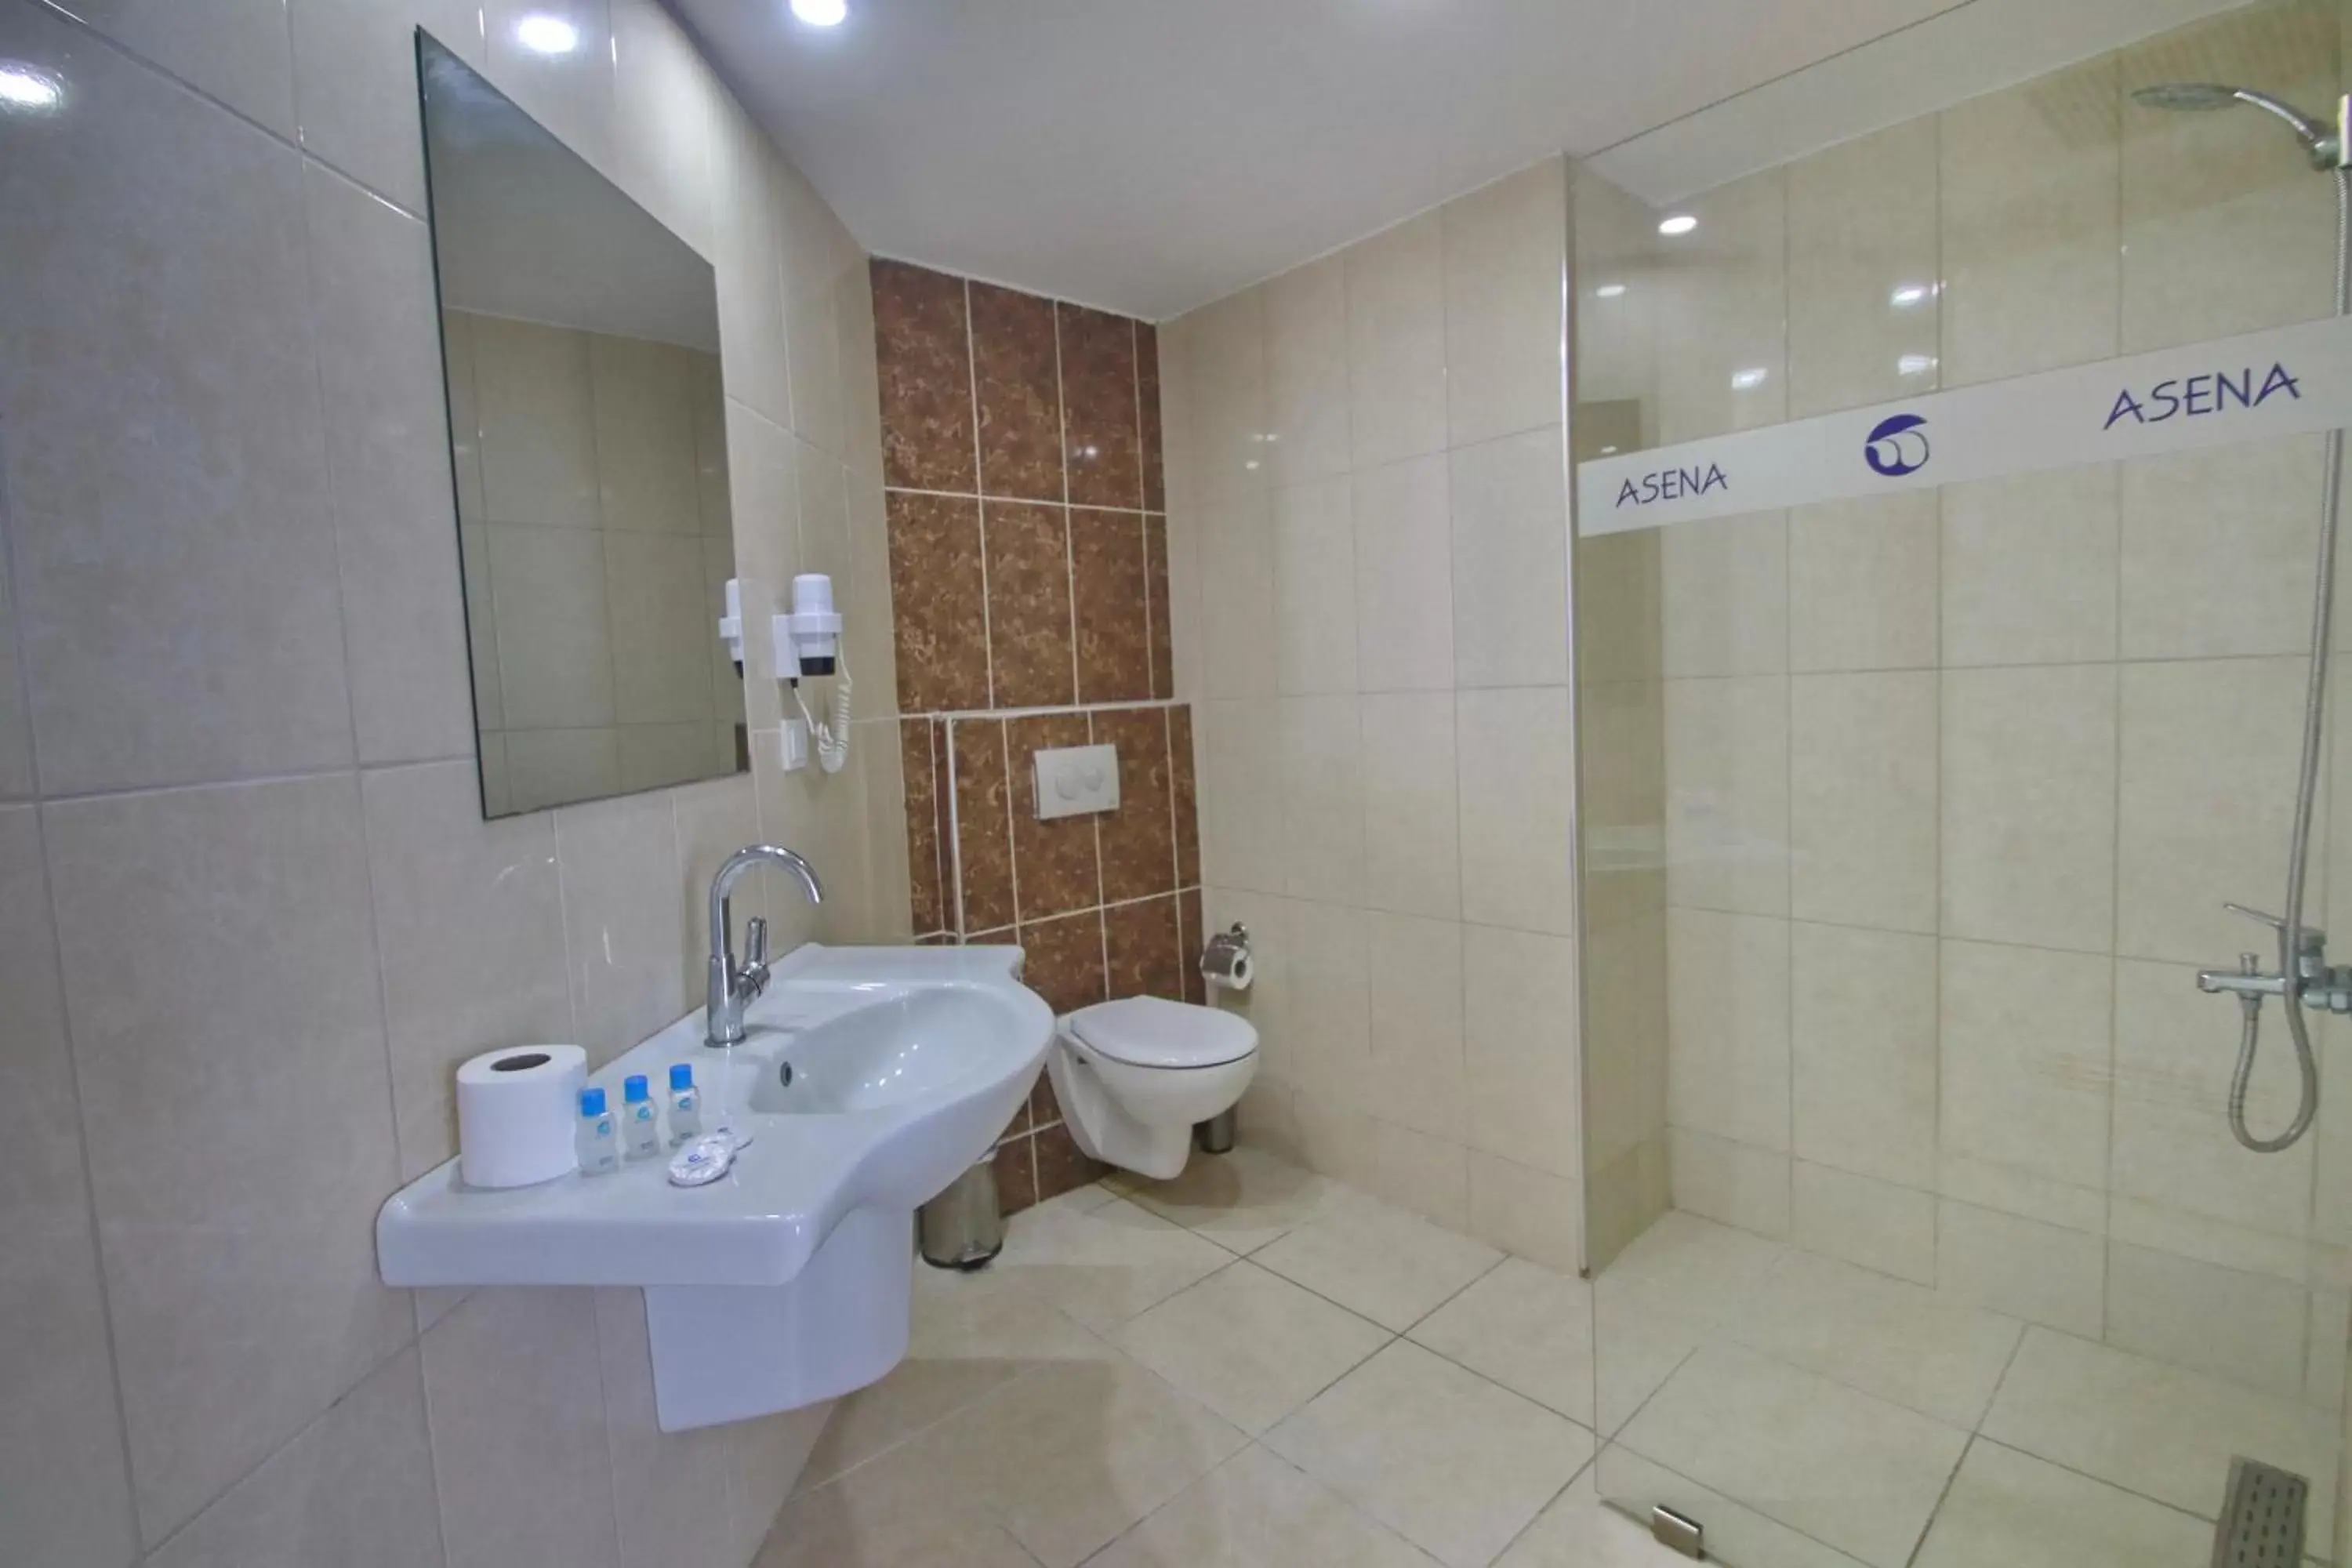 Bathroom in Asena Hotel